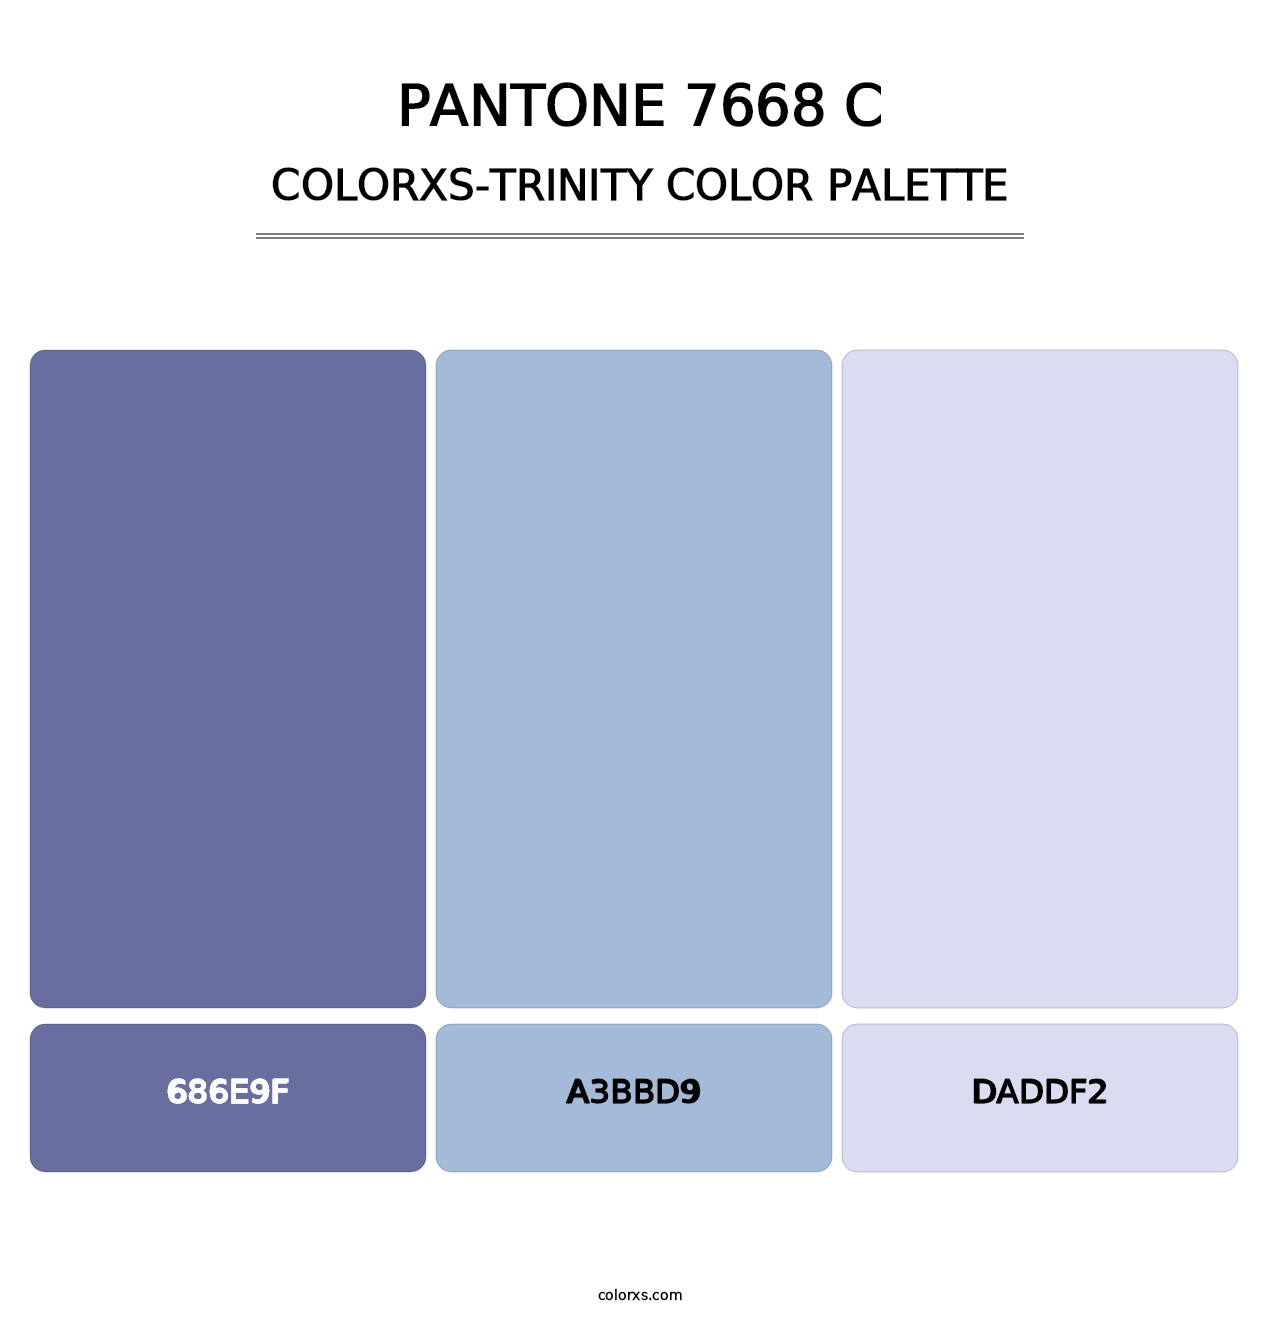 PANTONE 7668 C - Colorxs Trinity Palette